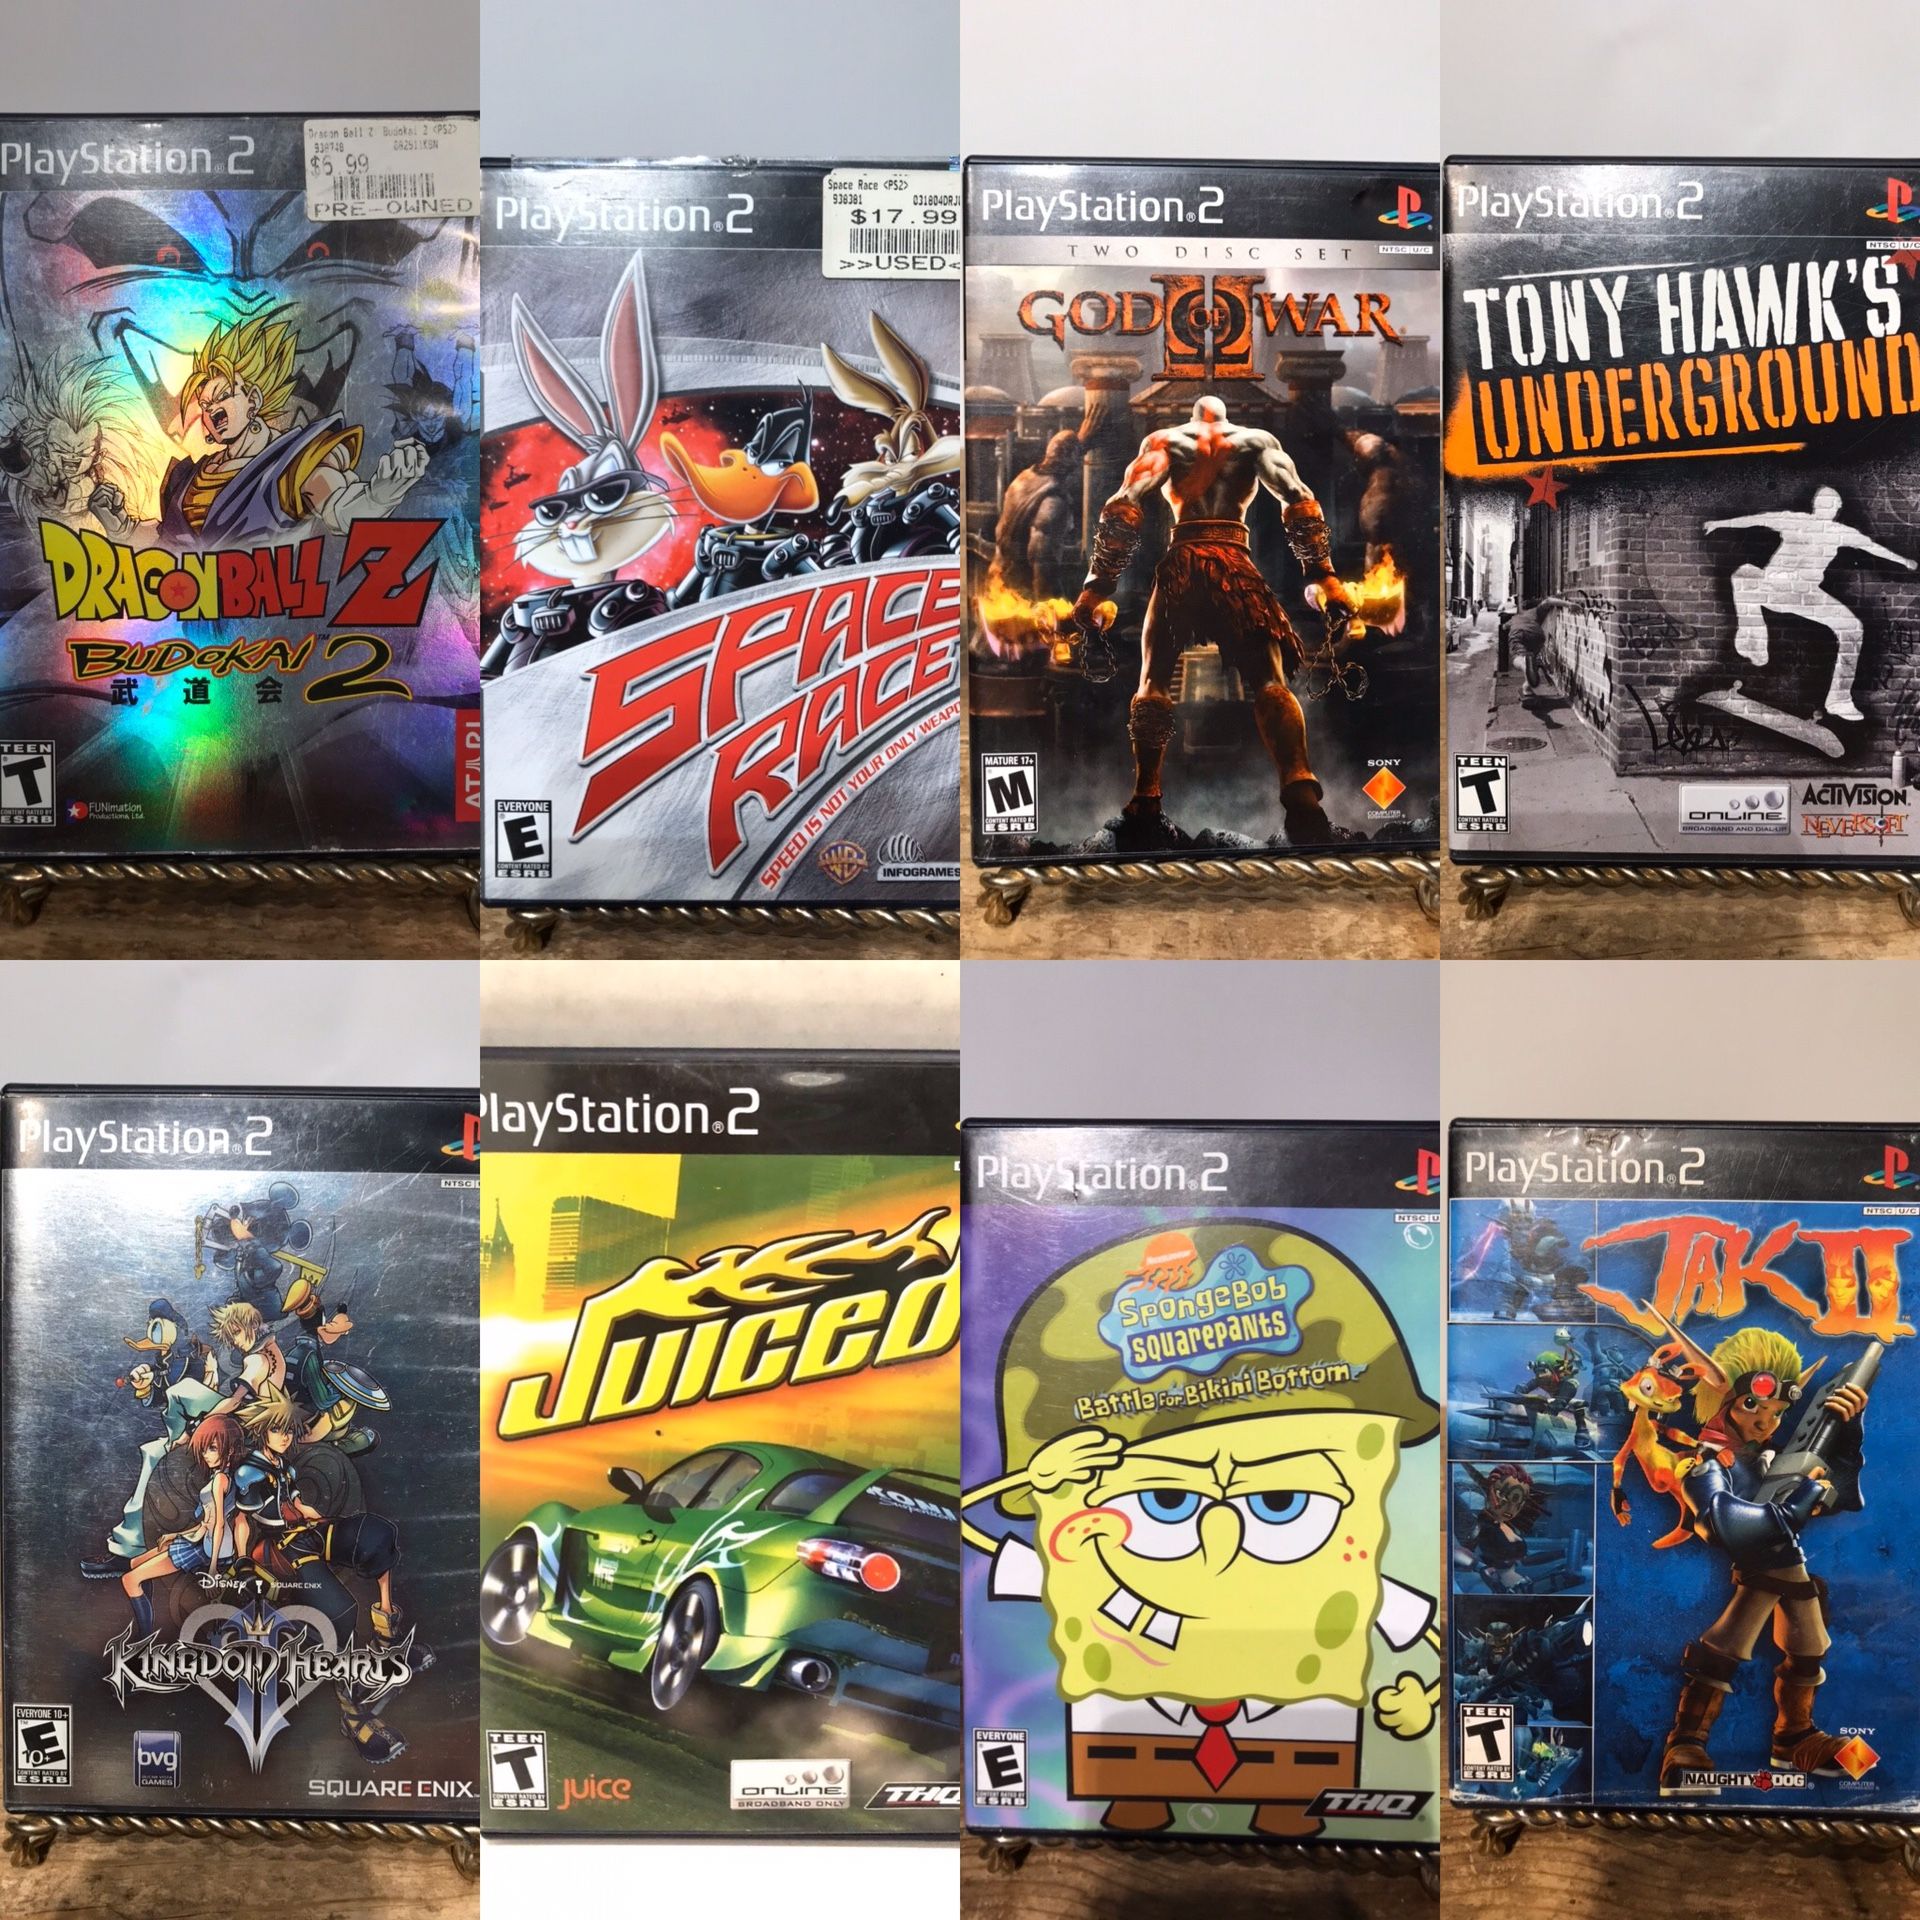 Playstation 2/ Ps2 Games, Lots Of Great Titles, (Dragonball Z, God of War, Tony Hawk, Fifa, Star Wars and more!!) 🎮❄️🕹